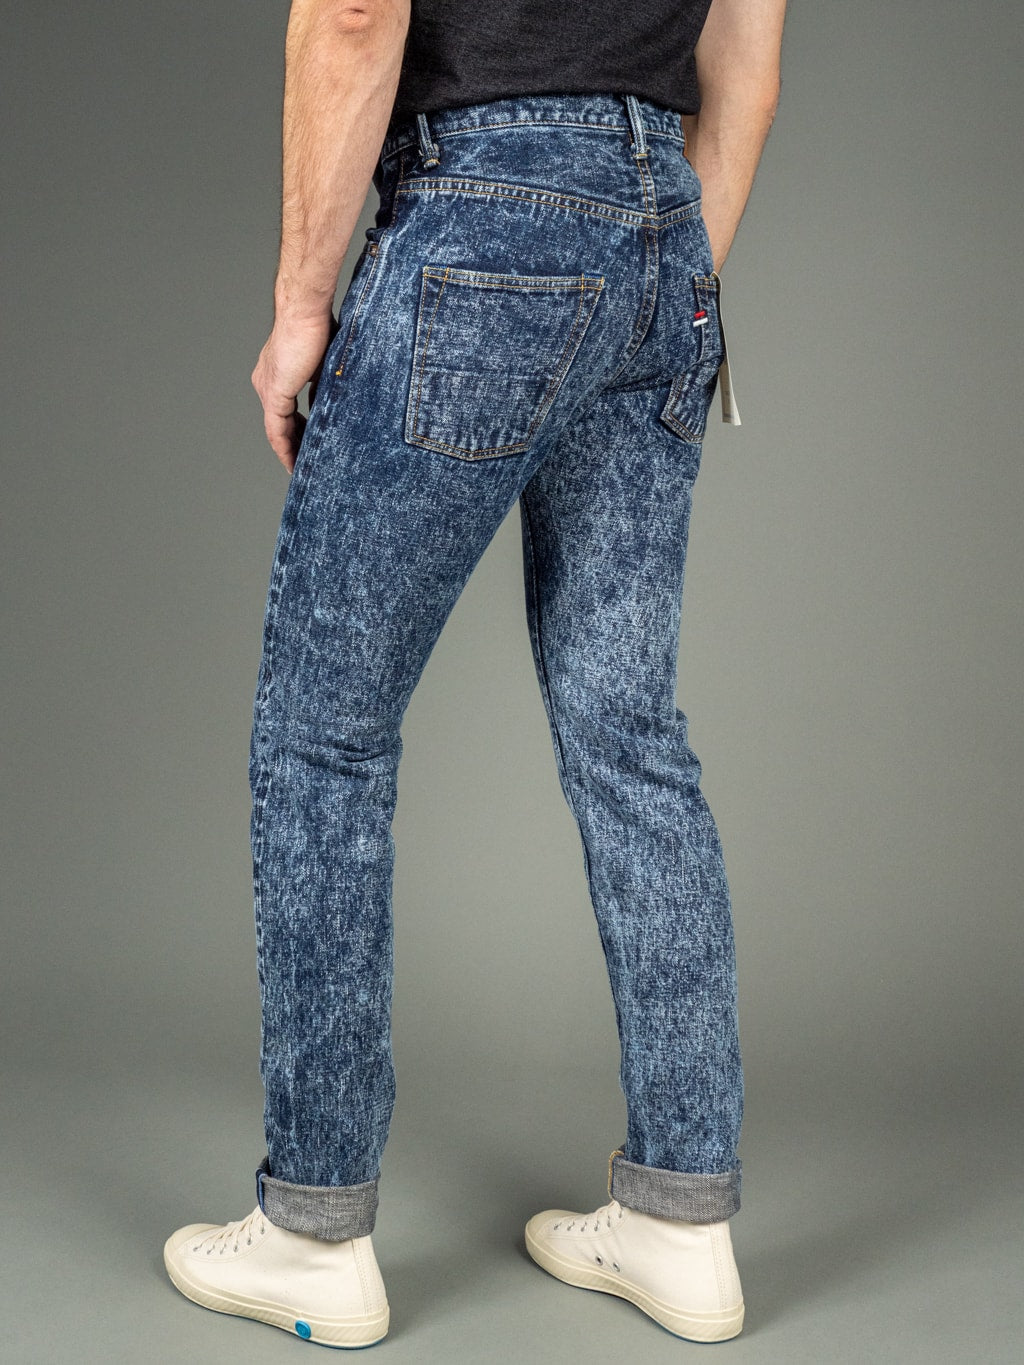 Tanuki Natural Acid Wash High Tapered Jeans Fit